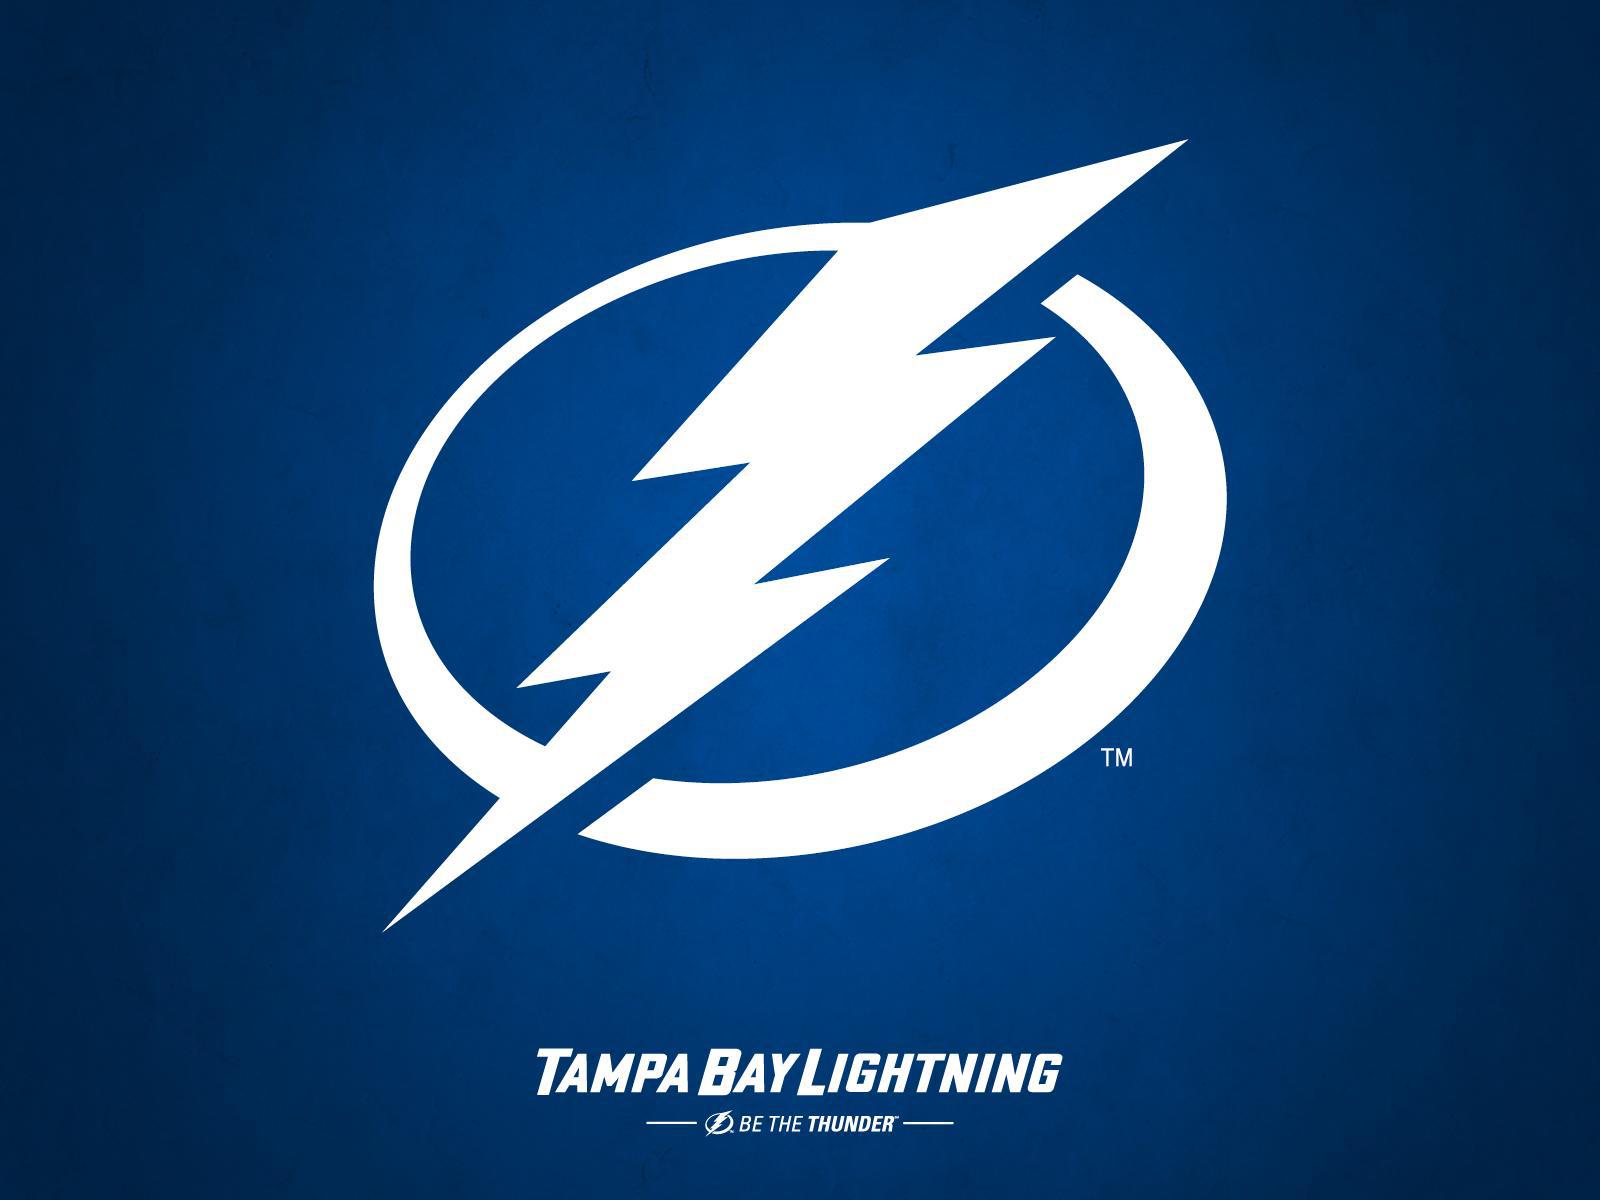 Tampa Bay Lightning Wallpaper Downloads   Wallpaper Downloads